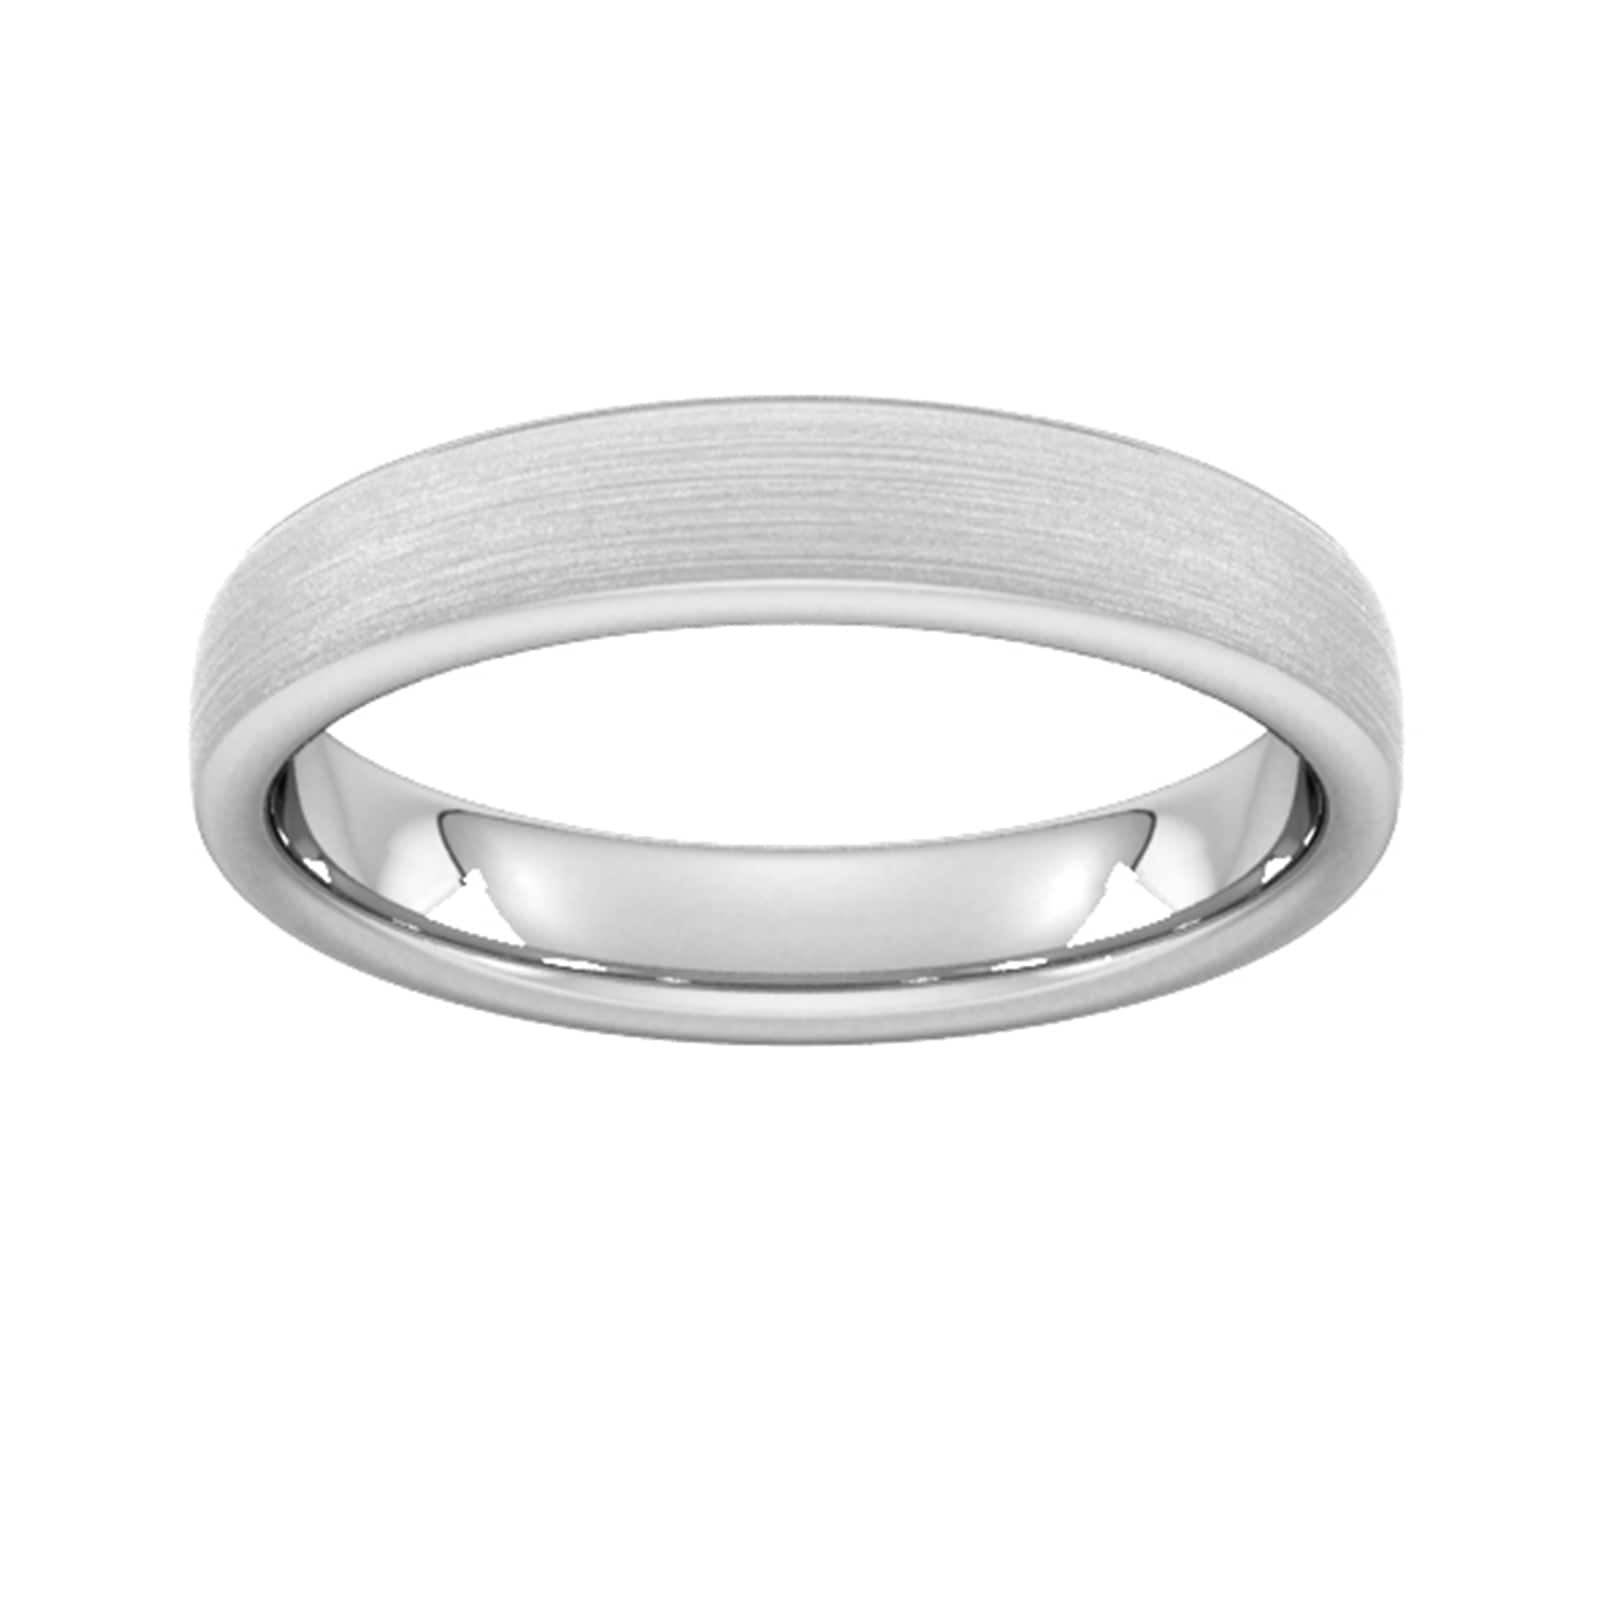 4mm Slight Court Standard Matt Finished Wedding Ring In 950 Palladium - Ring Size H